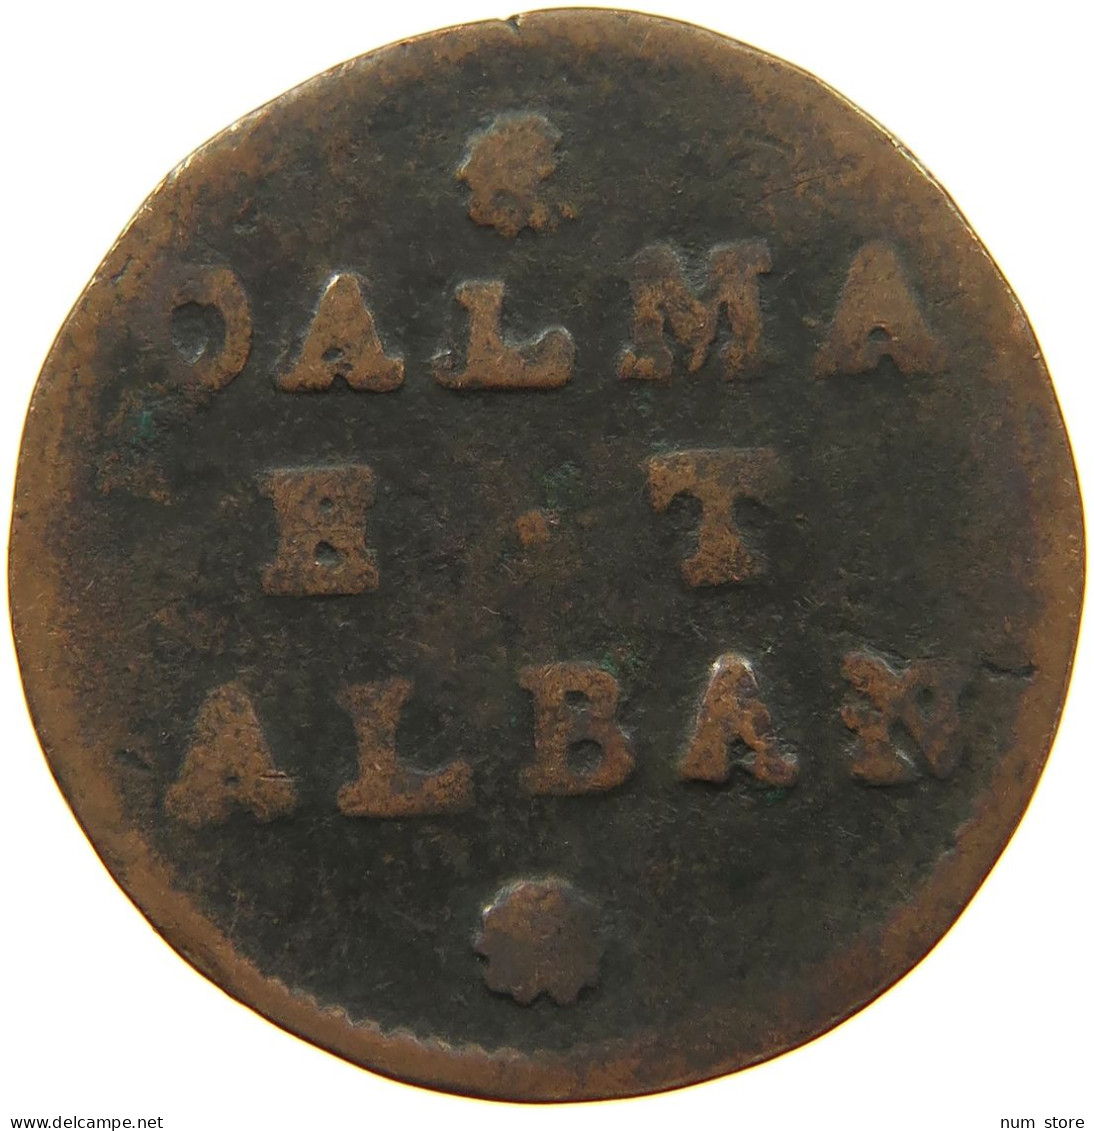 DALMATIA ALBANIA 2 SOLDI   #s055 0049 - Albania